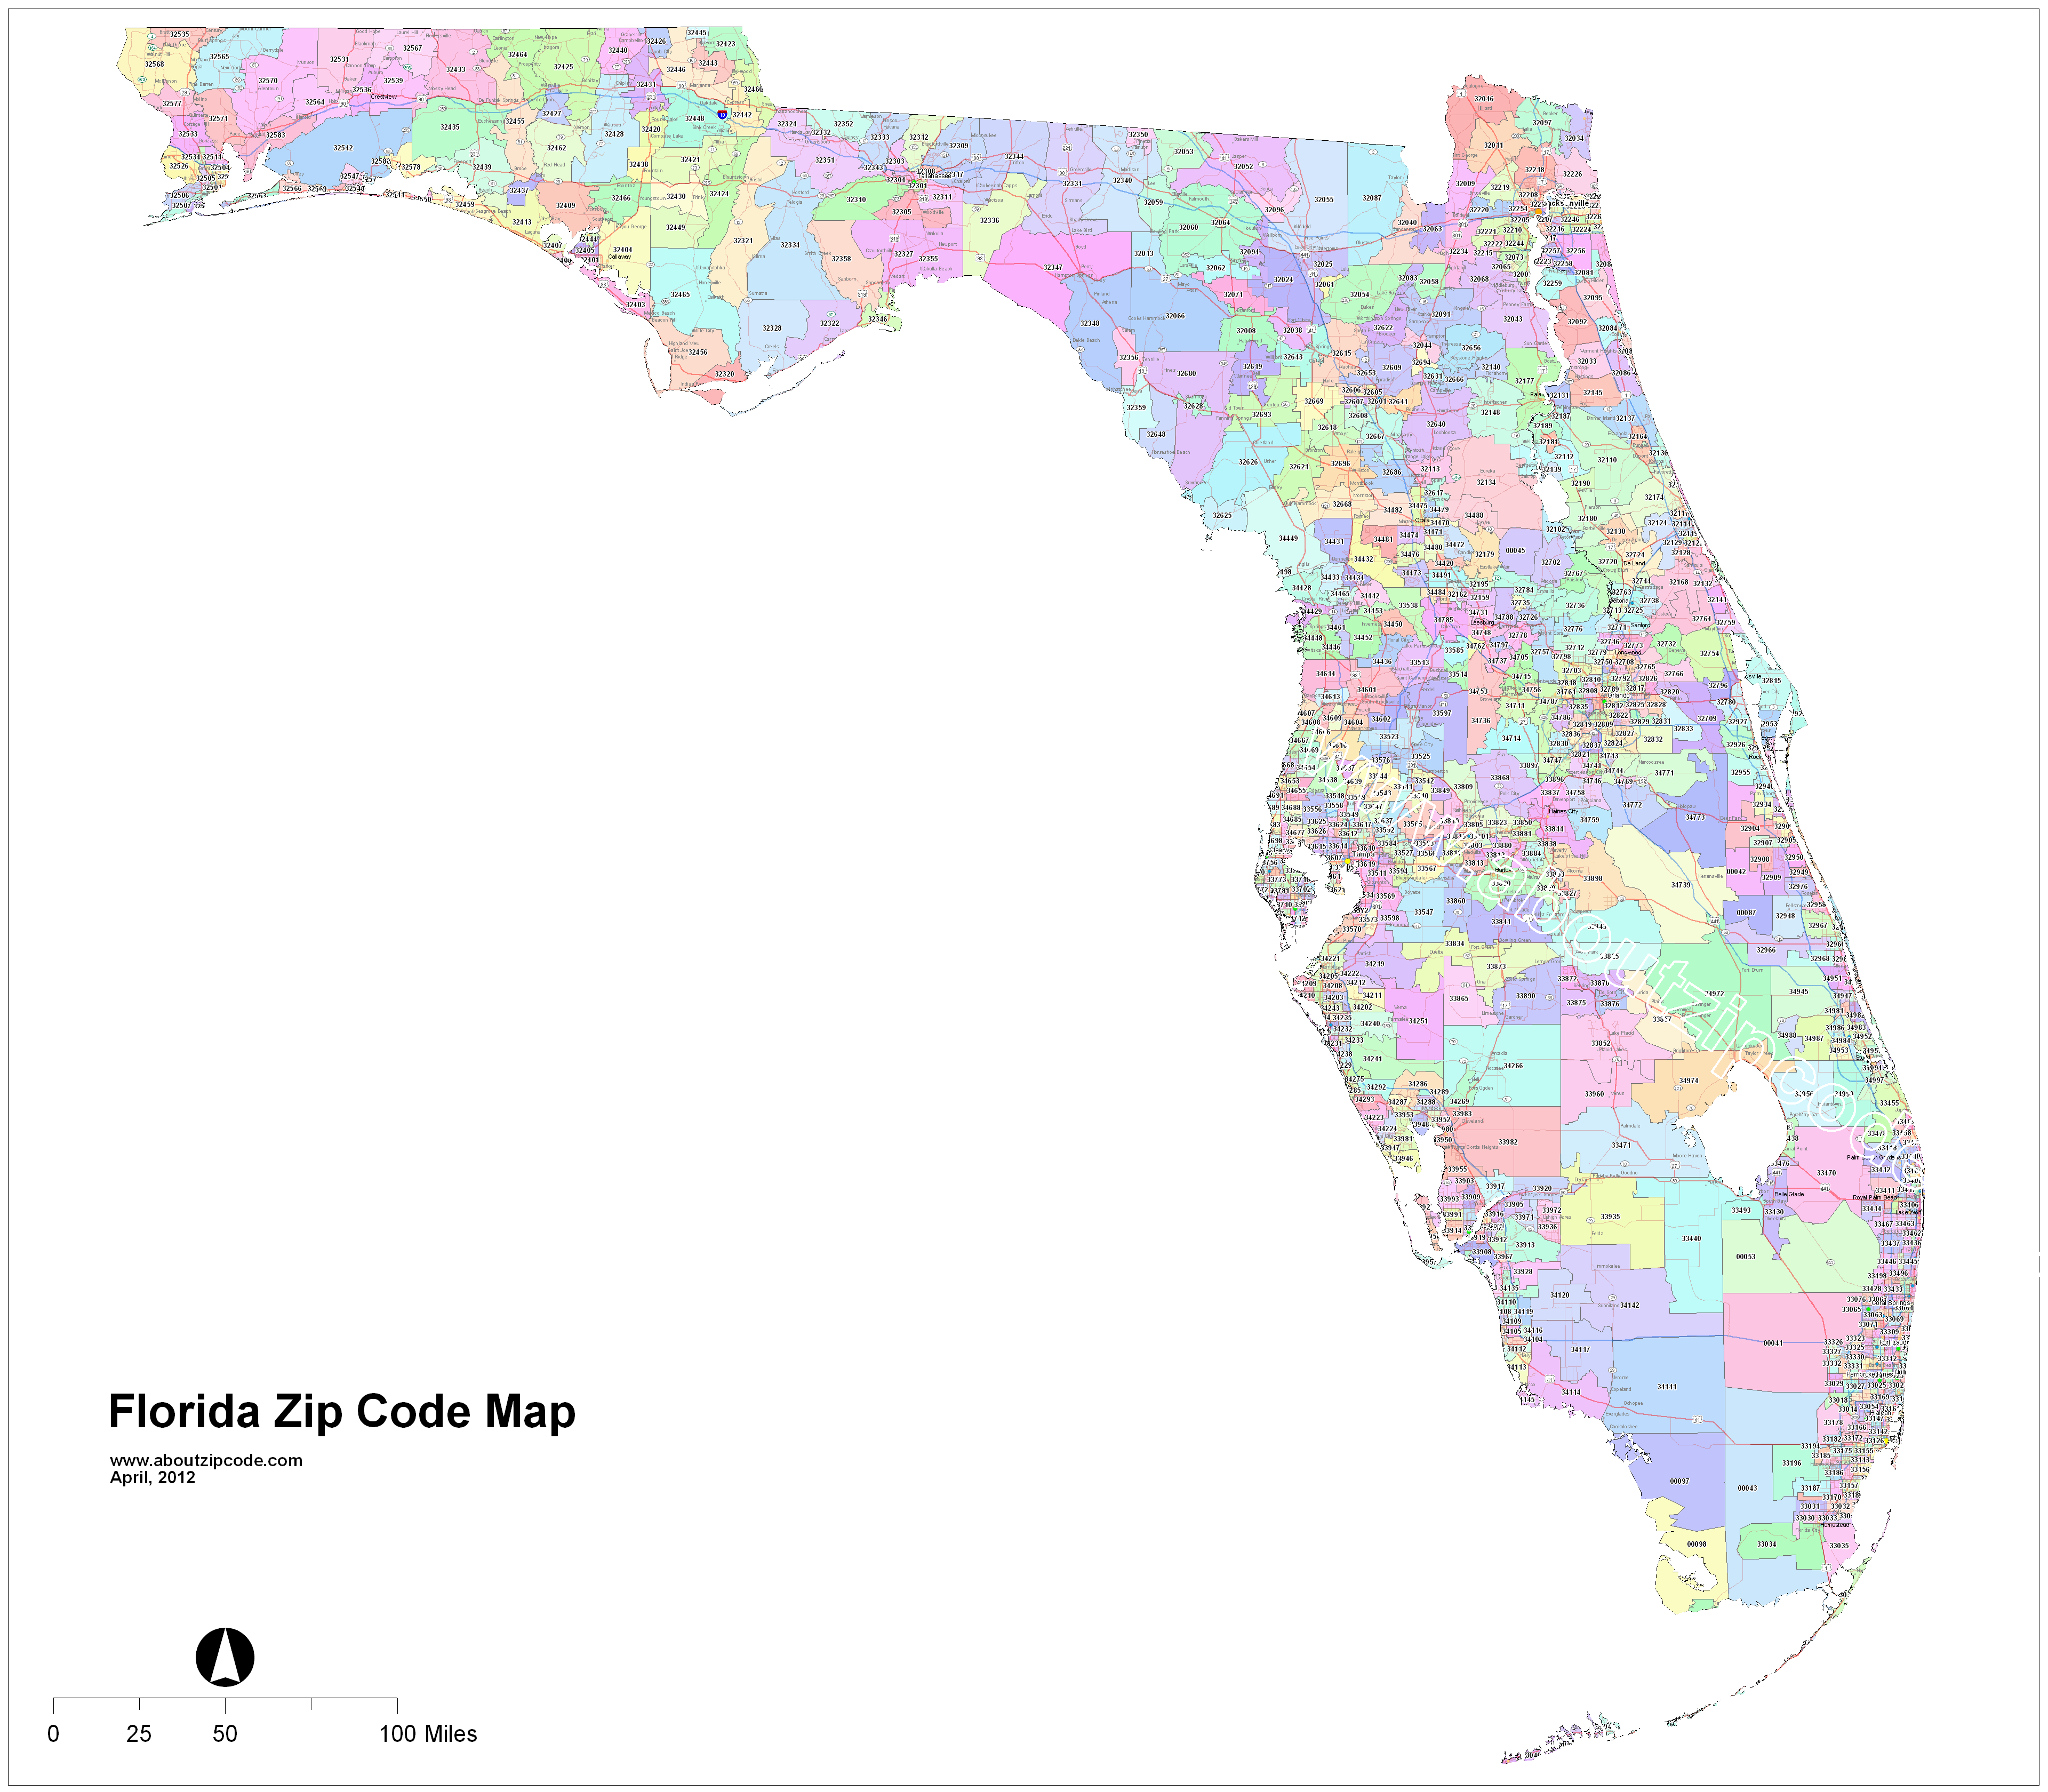 hudson fl zip code map Florida Zip Code Maps Free Florida Zip Code Maps hudson fl zip code map